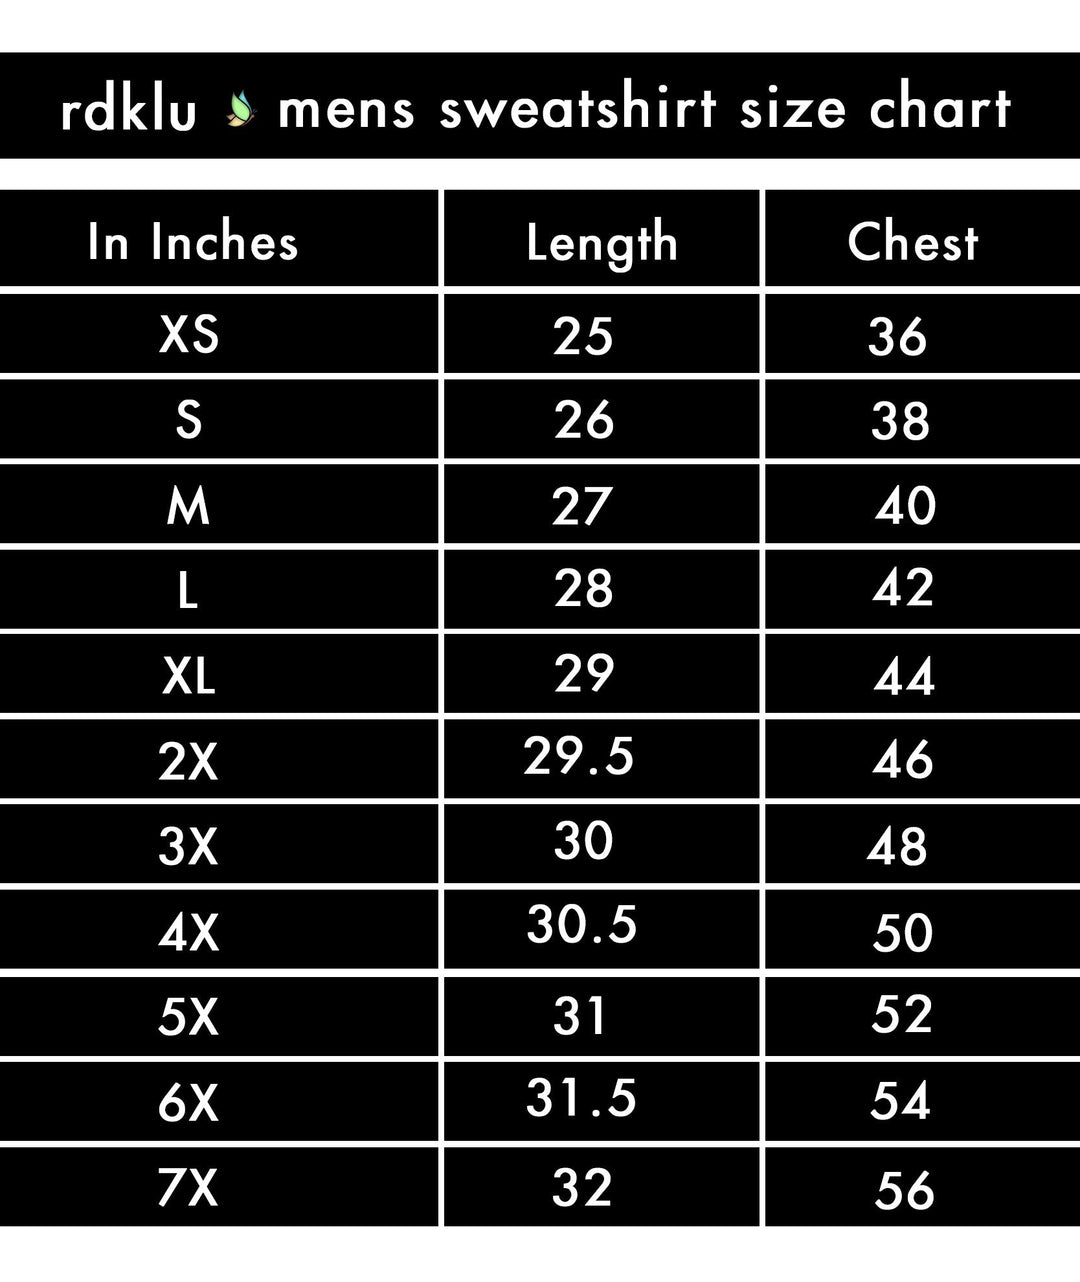 RDKLU MENS SWEATSHIRT - RDKL-Men's Sweatshirt#163